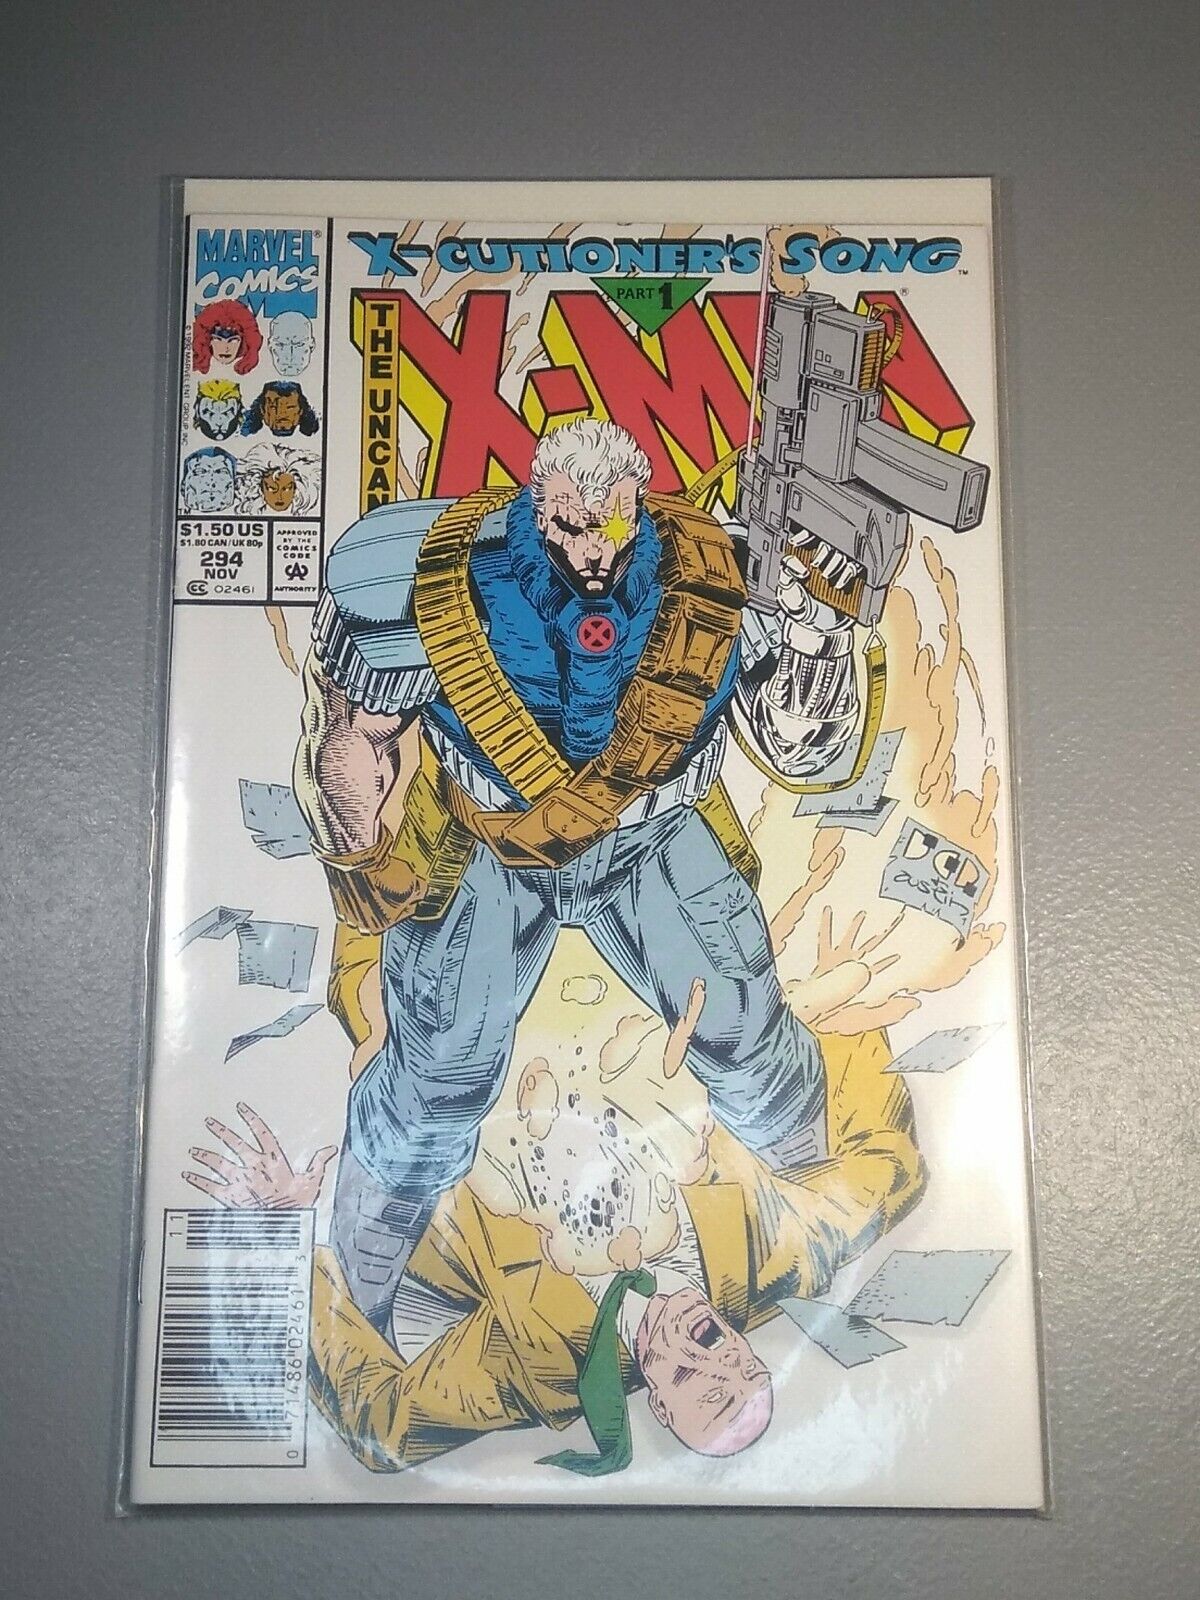 Vintage Nov 1992 The Uncanny X-Men #294 Marvel Comics Mint In Plastic Sleeve